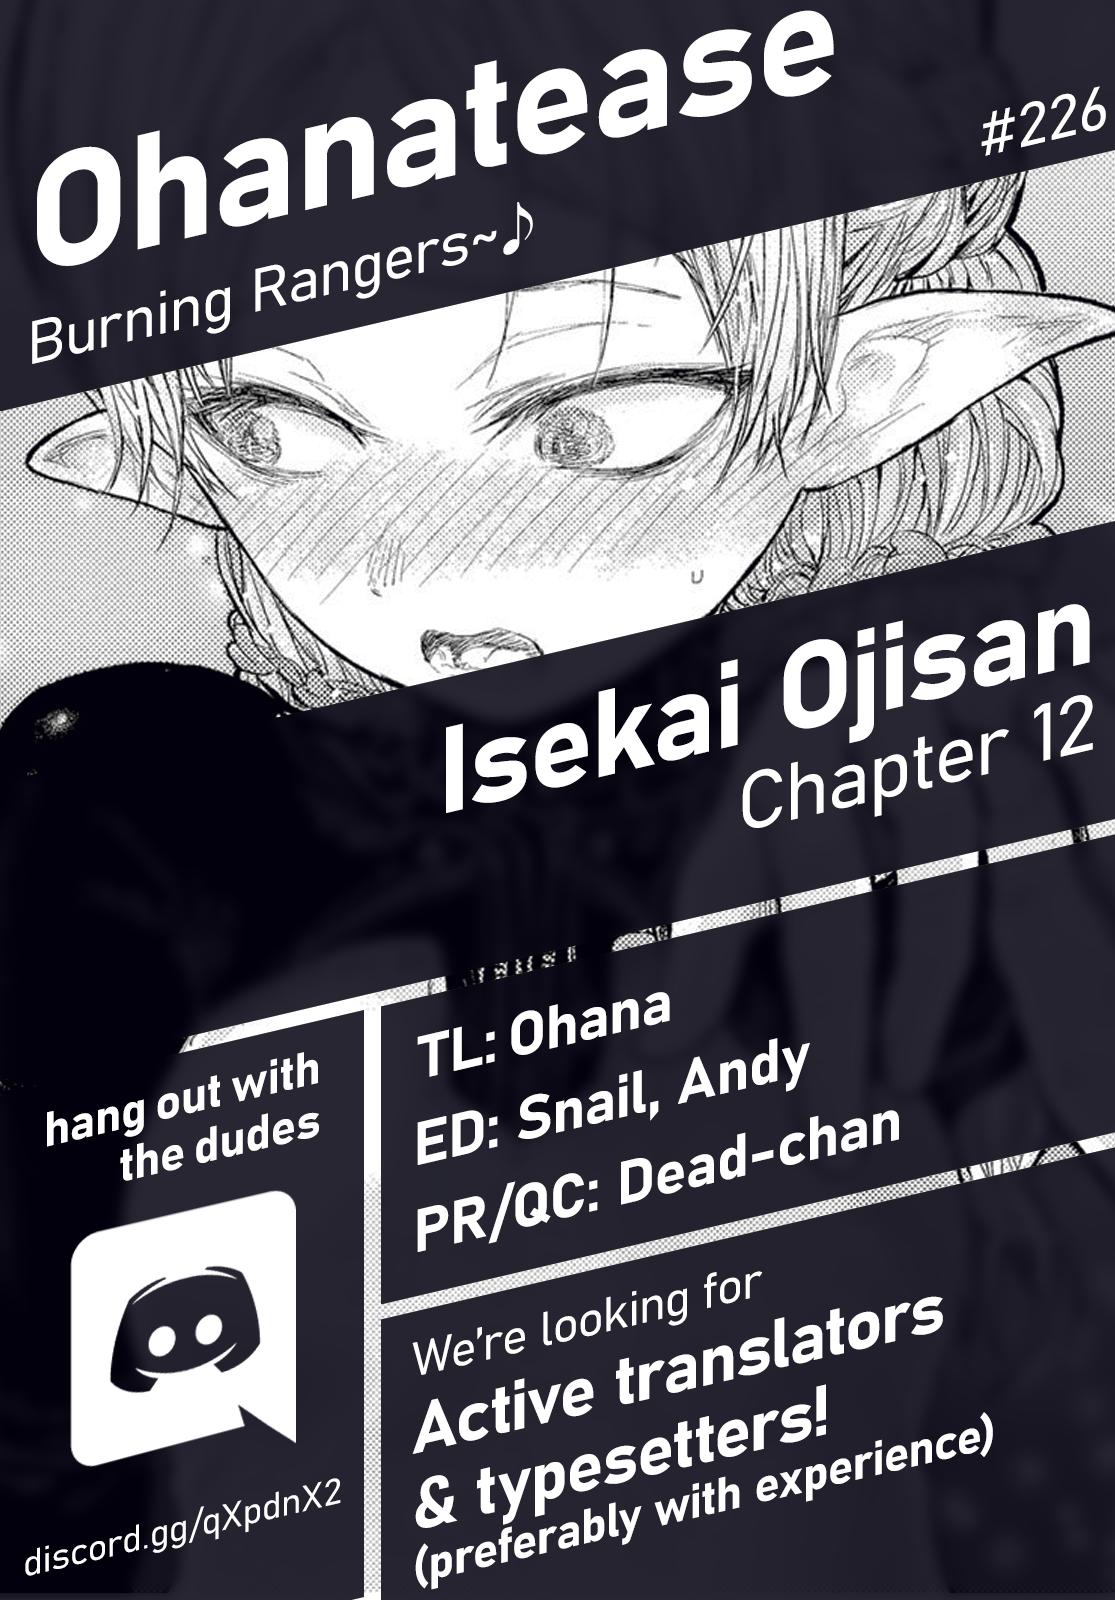 Read Isekai Ojisan Chapter 41 on Mangakakalot